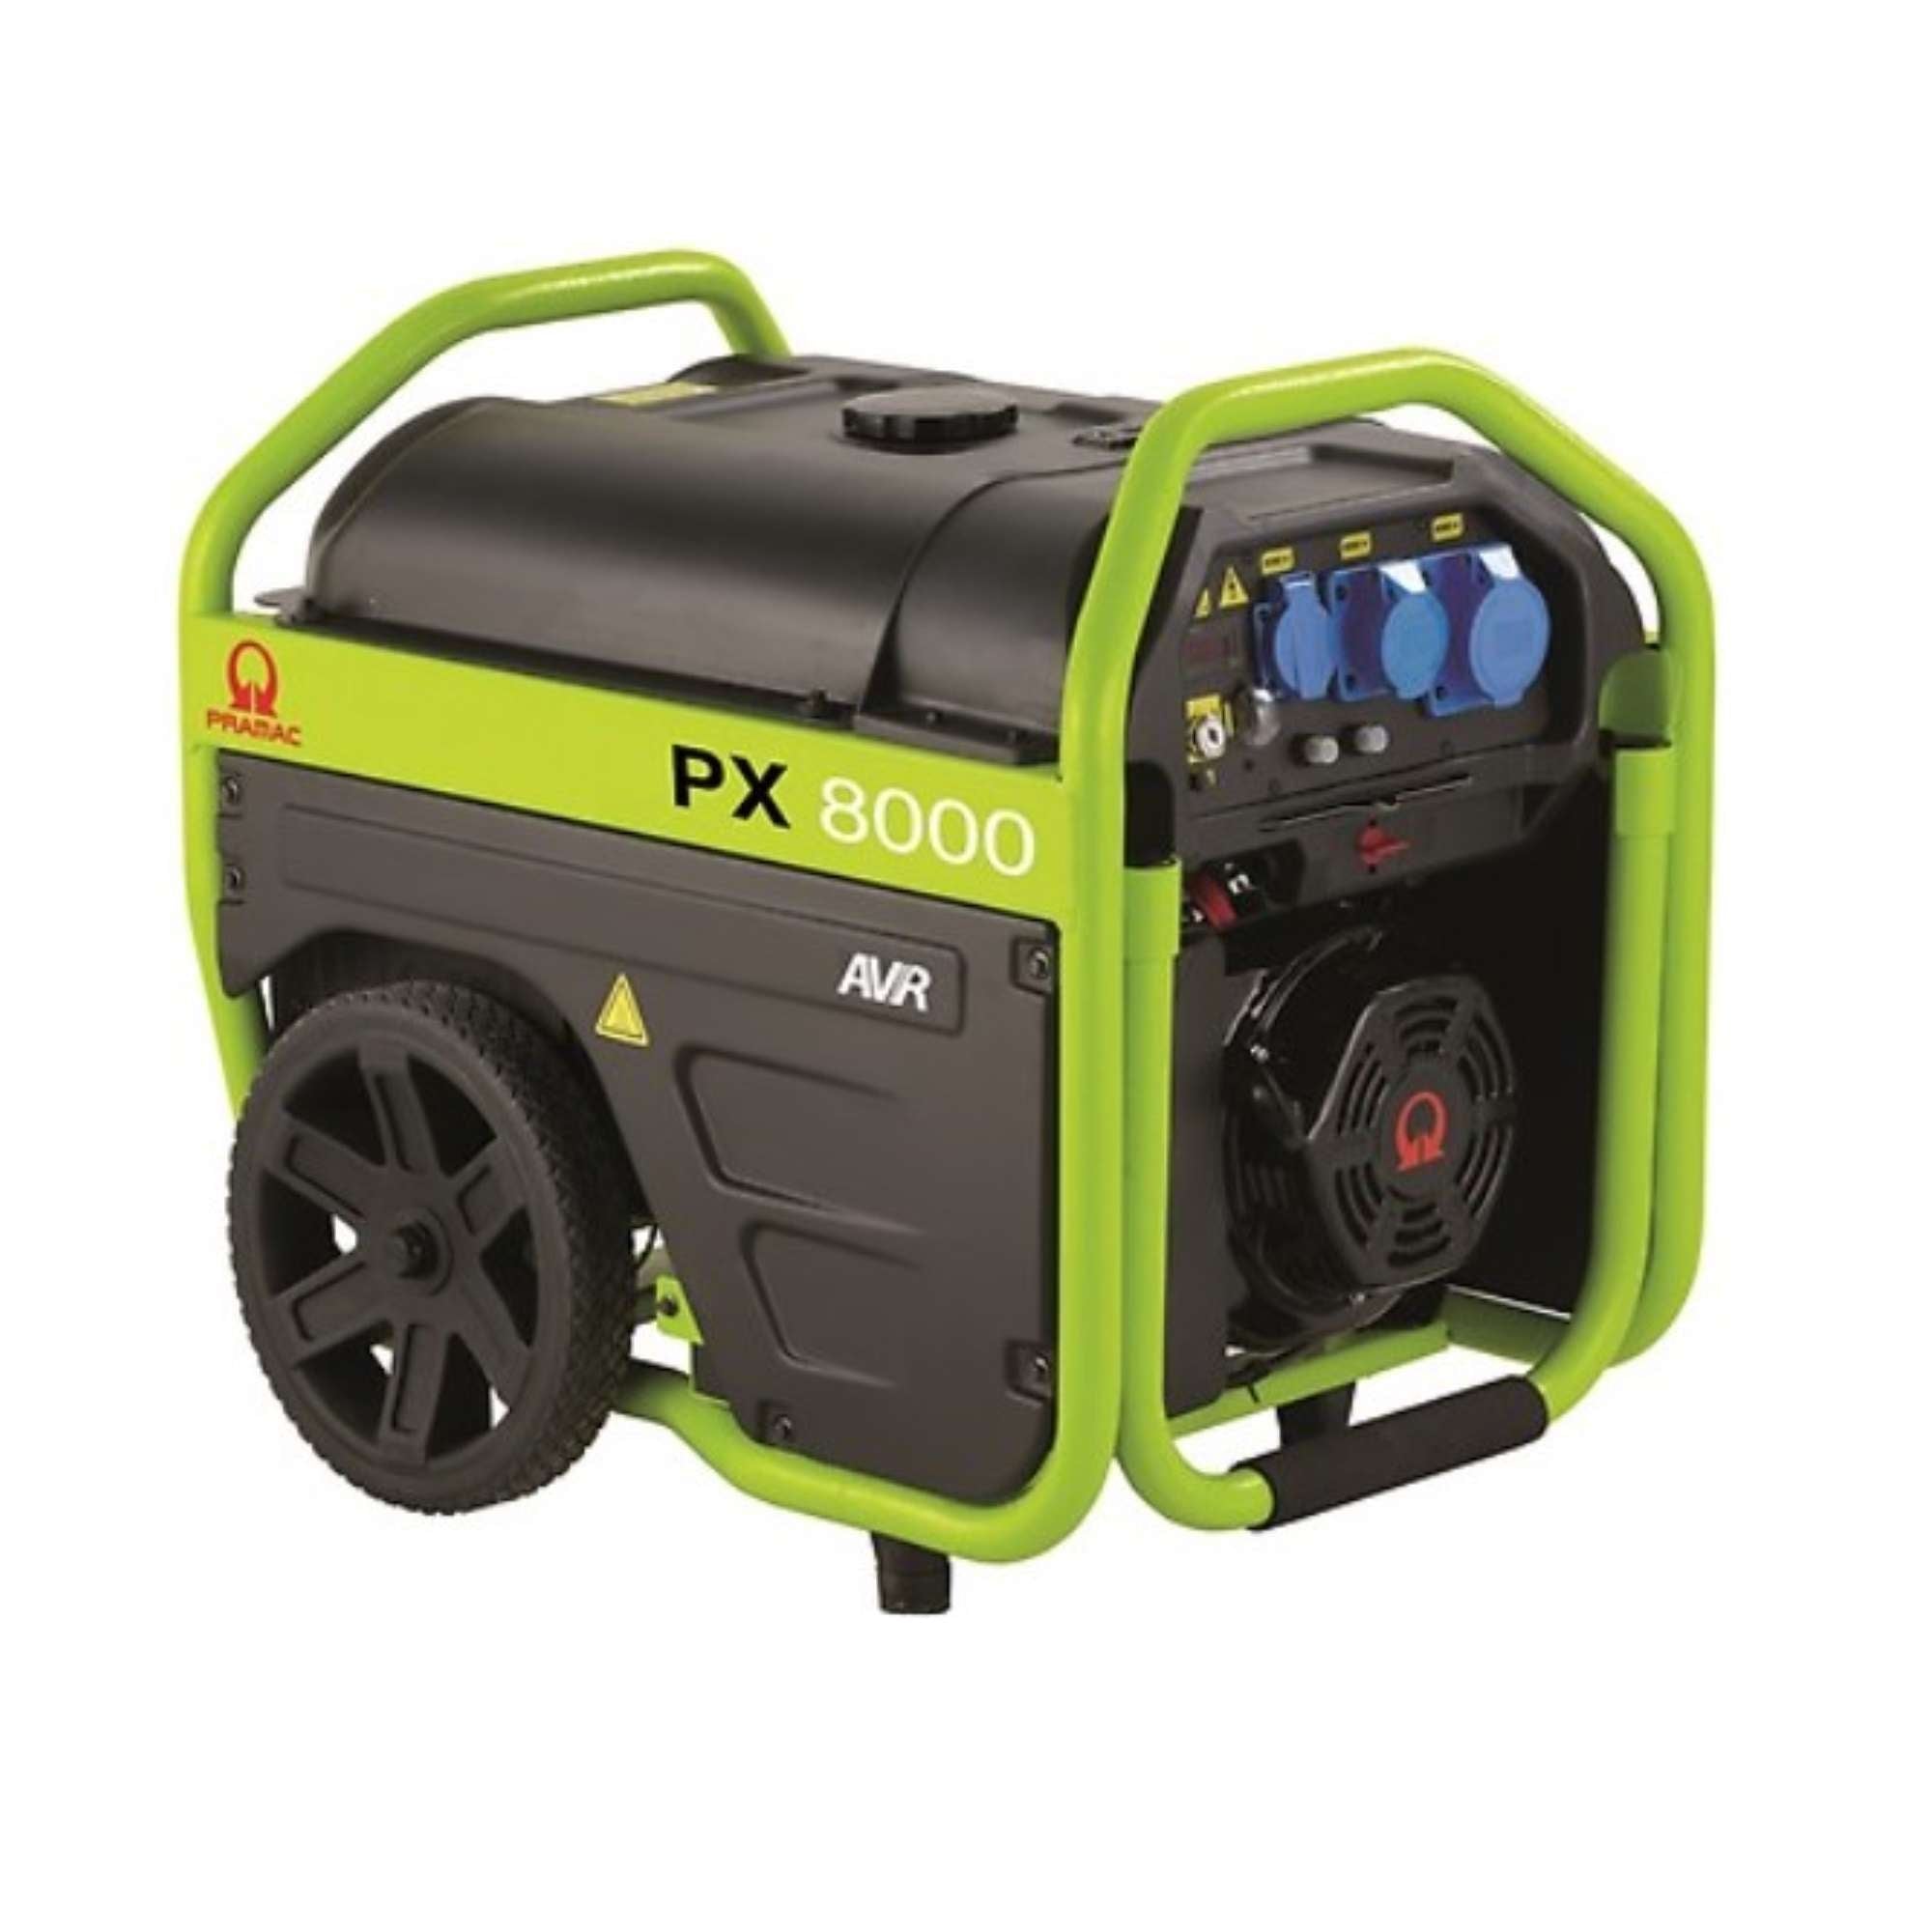 Gasoline-powered wheeled generator set with integrated AVR - Pramac PX 8000